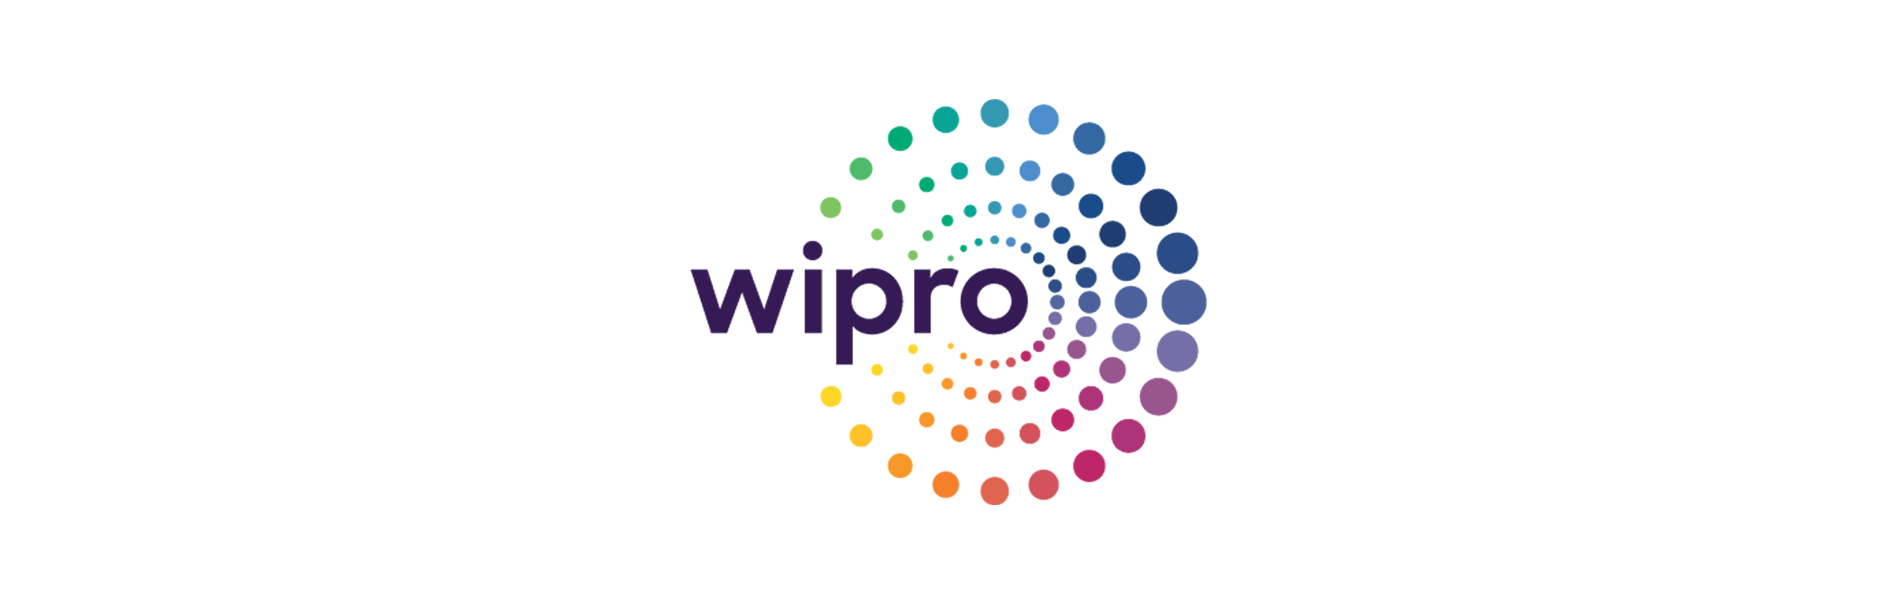 Case Studies- Transformative Apple Partnerships by Wipro